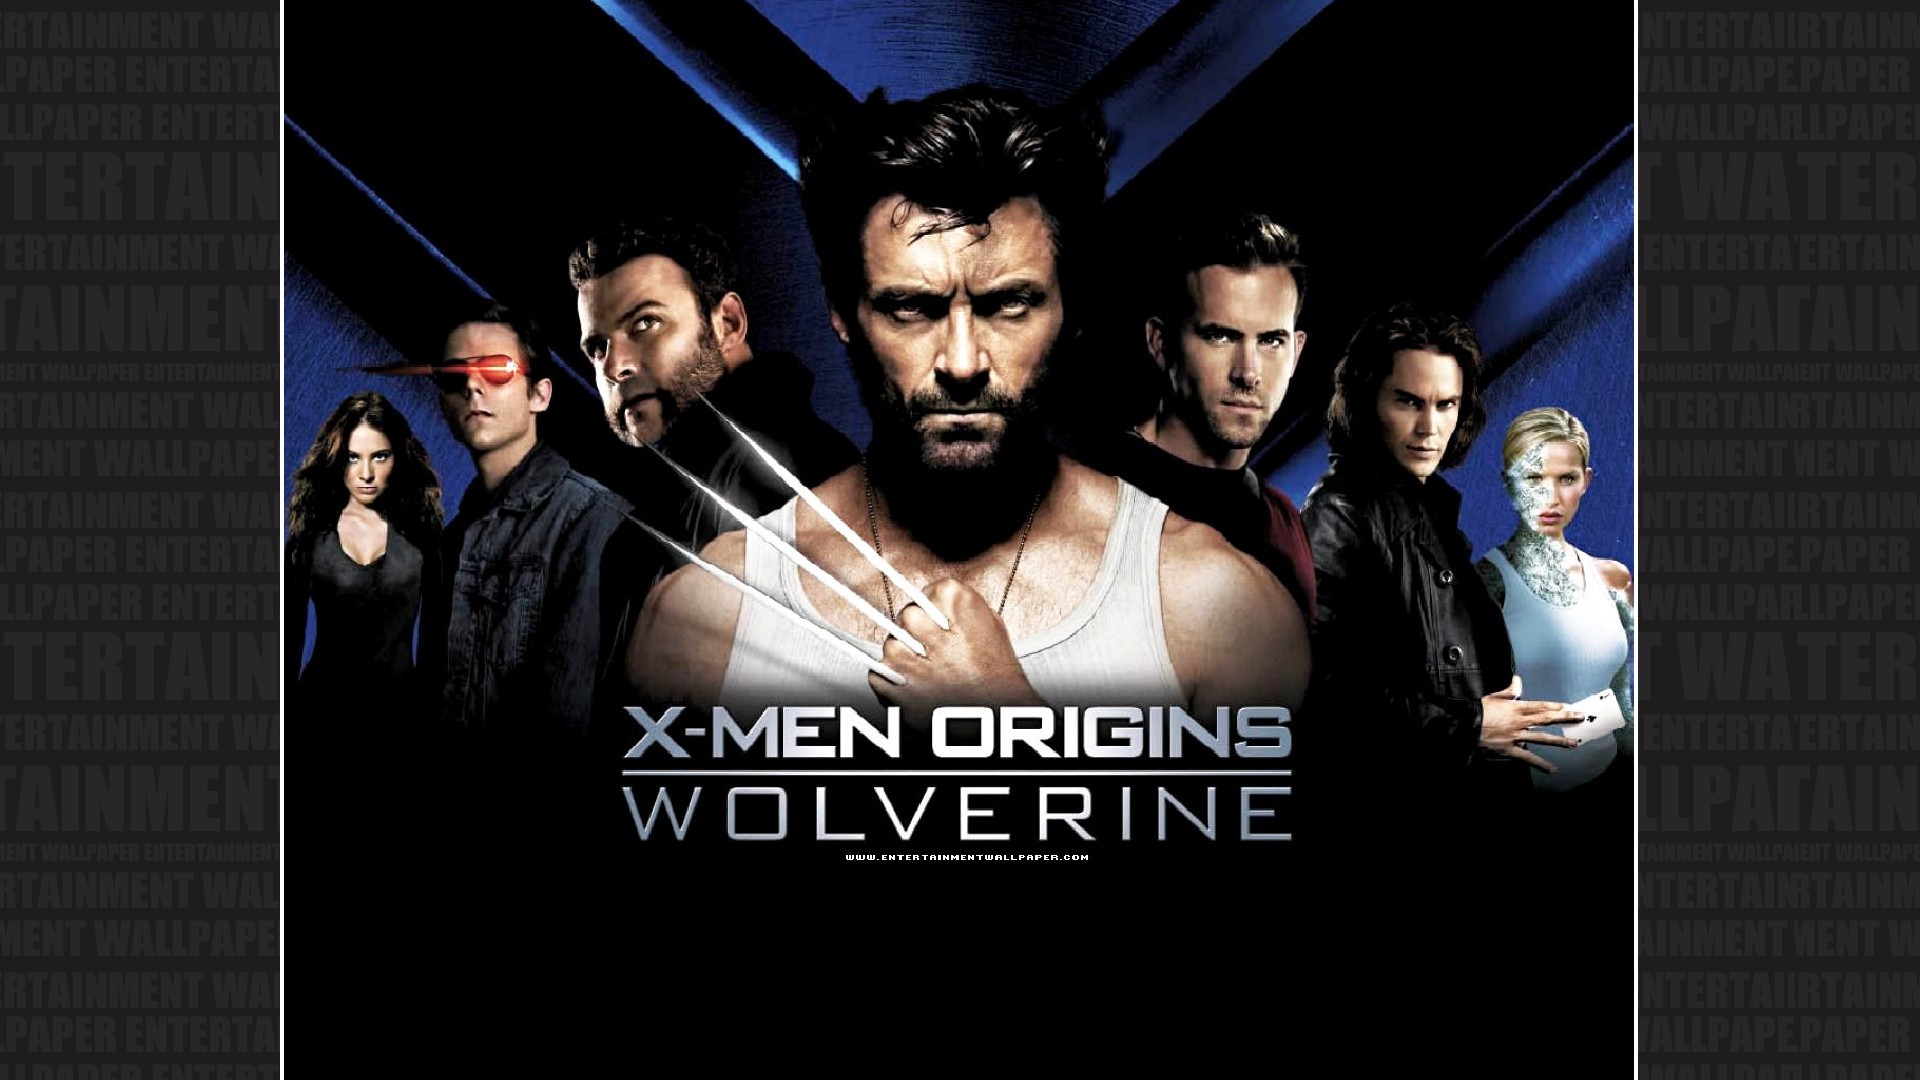 1920x1080 X-Men Origins: Wolverine Wallpaper - Original size, download now.